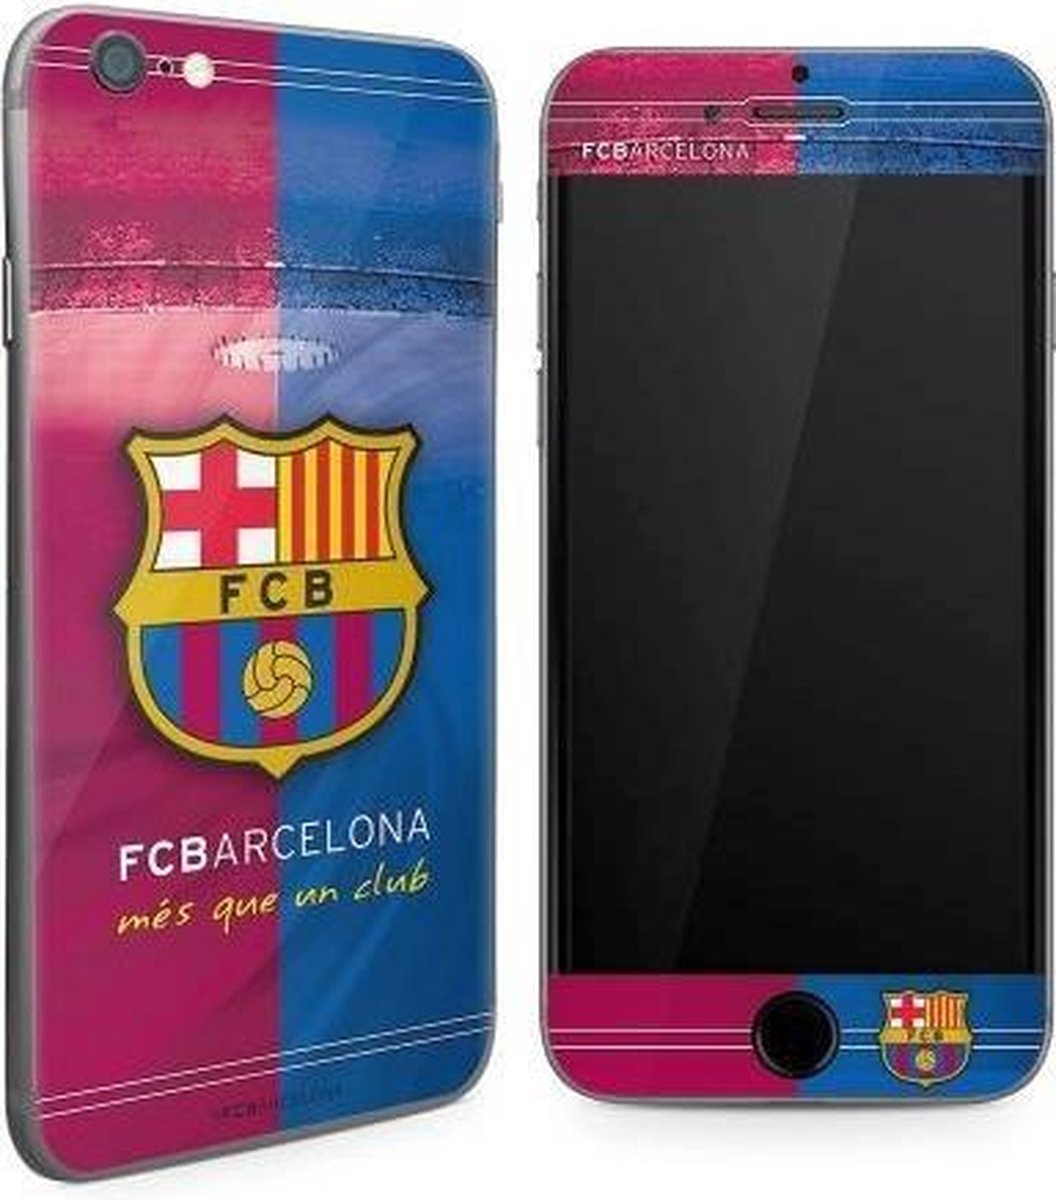 Iphone 6 cover/skin barcelona